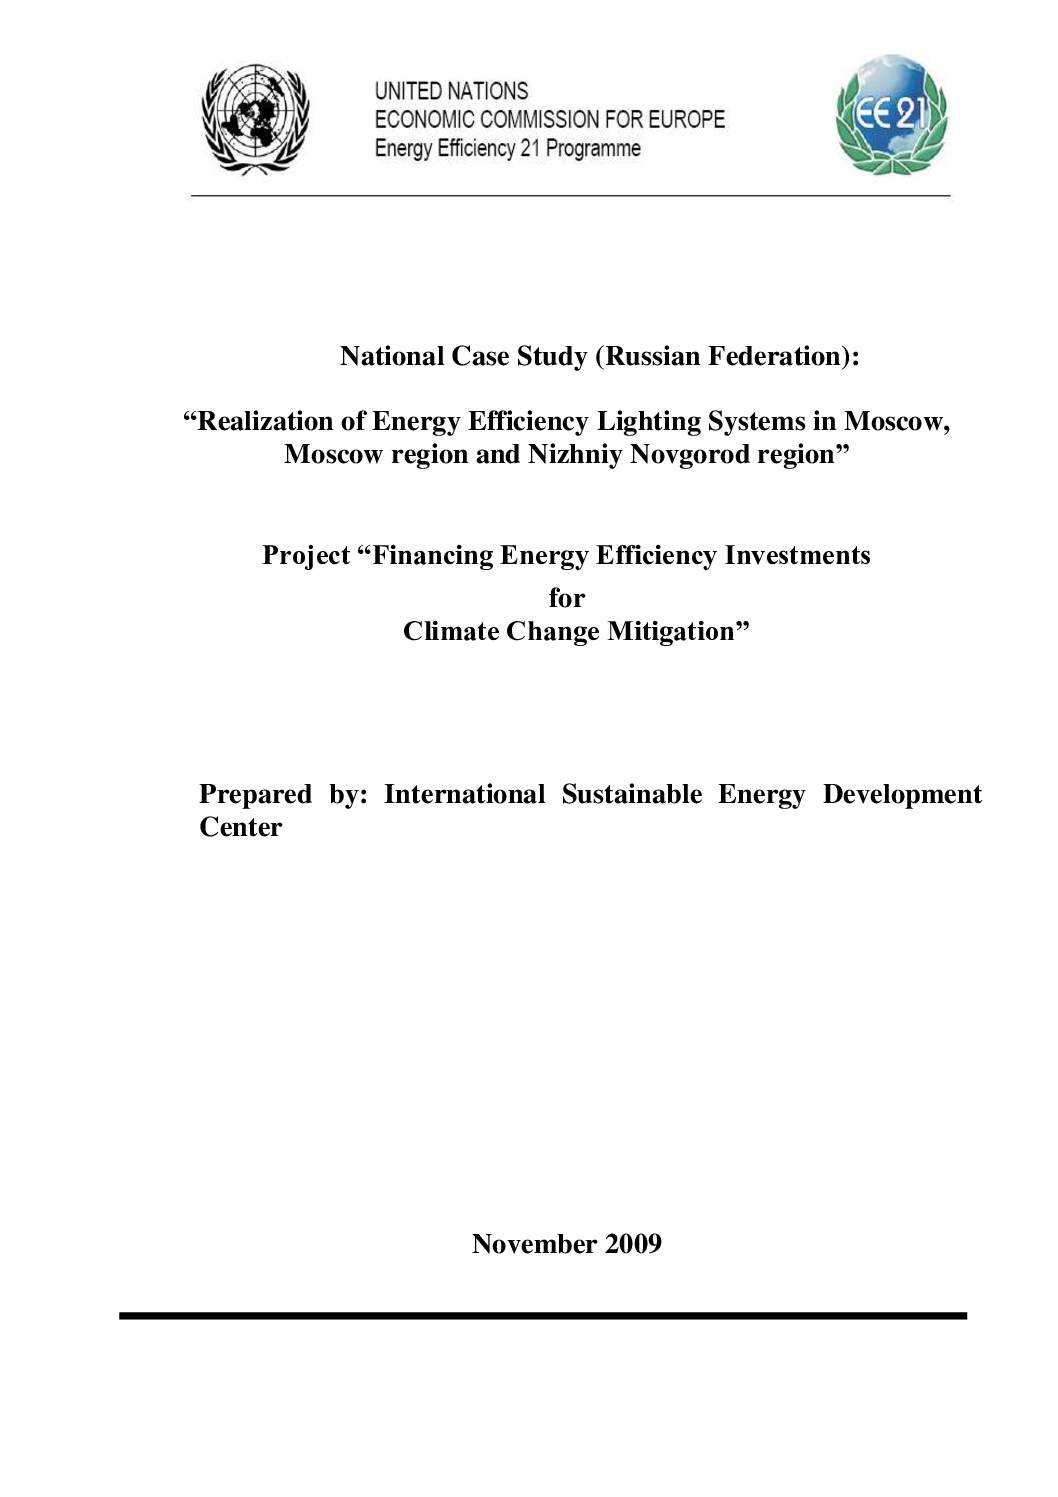 Realization of Energy Efficiency Lighting Systems in Moscow, Moscow region and Nizhniy Novgorod region